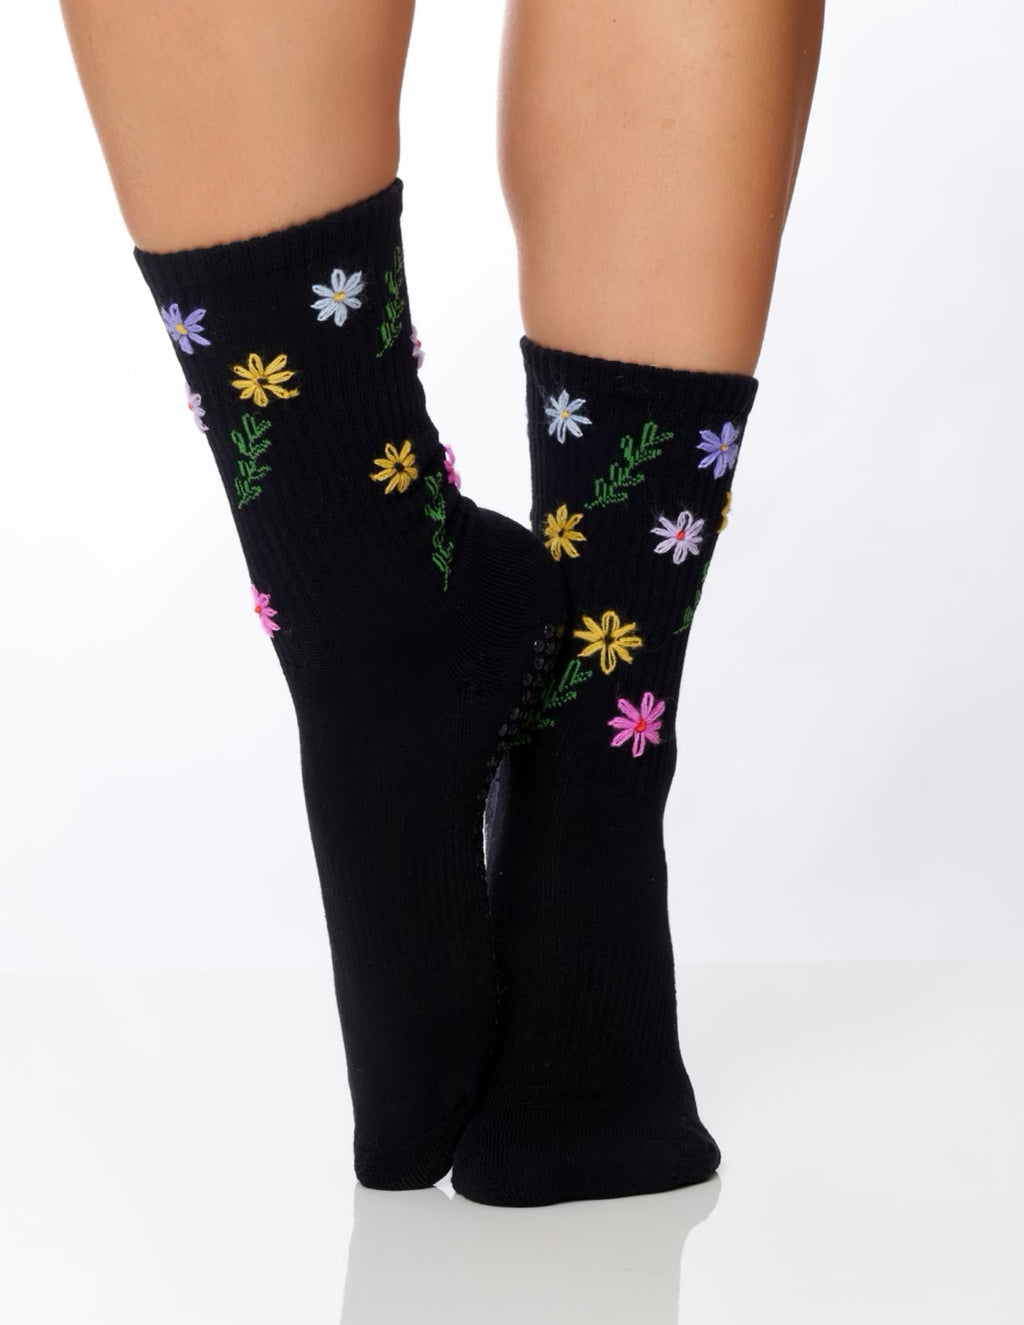 Floral socks - wild flowers to knock your socks off! ⋆ JOE COOL